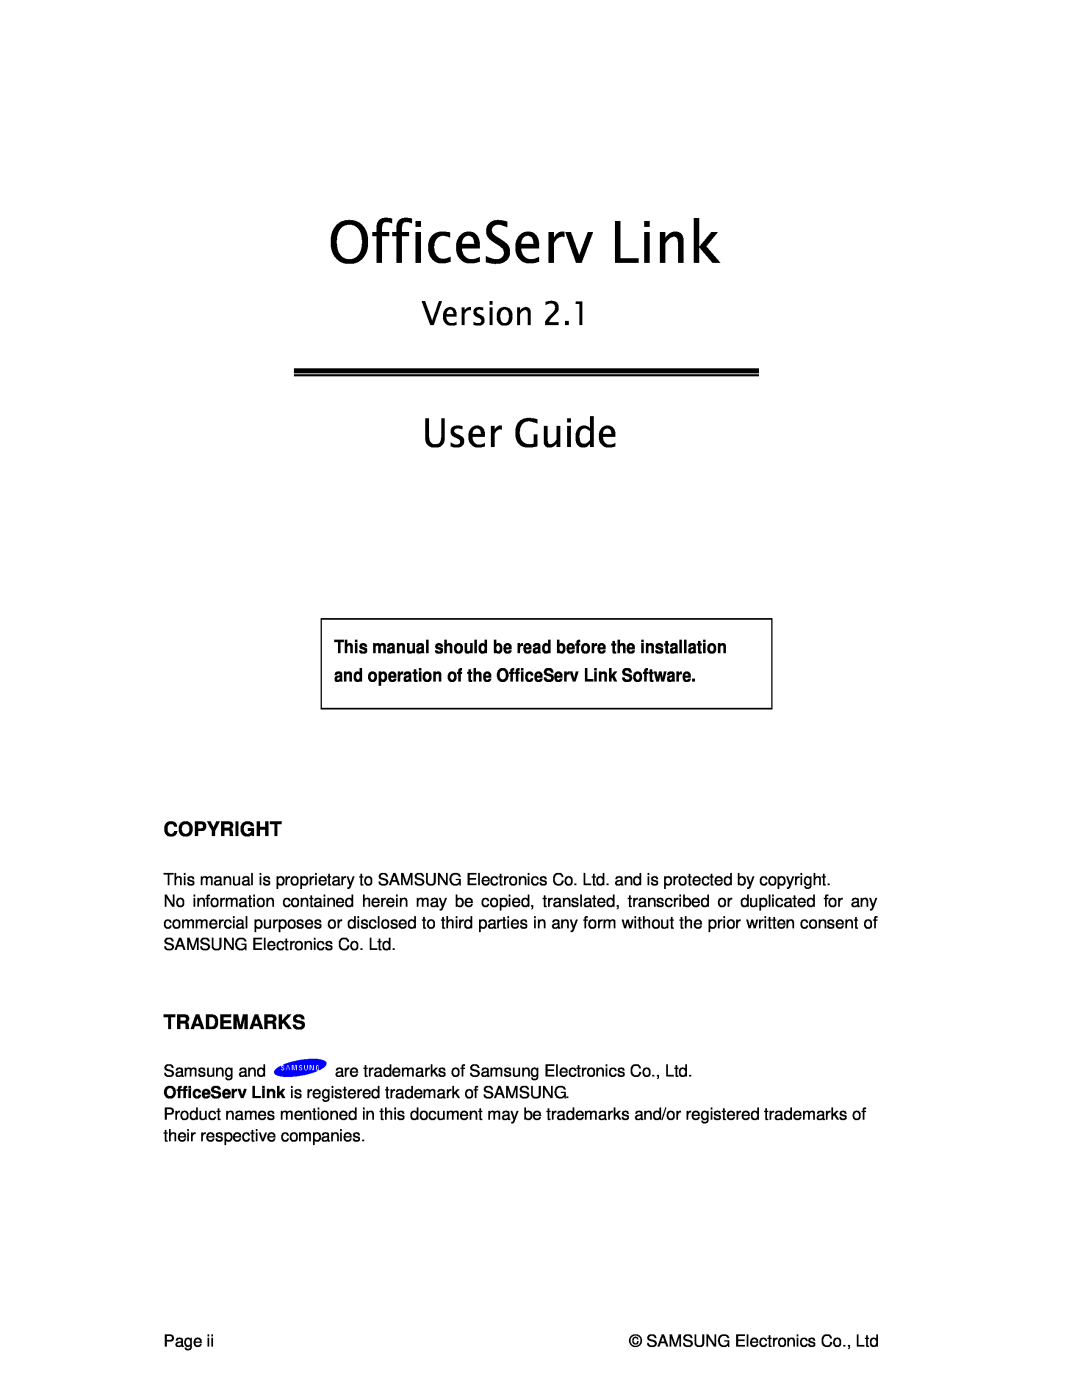 Samsung Version 2.1 manual User Guide, Copyright, Trademarks, OfficeServ Link 